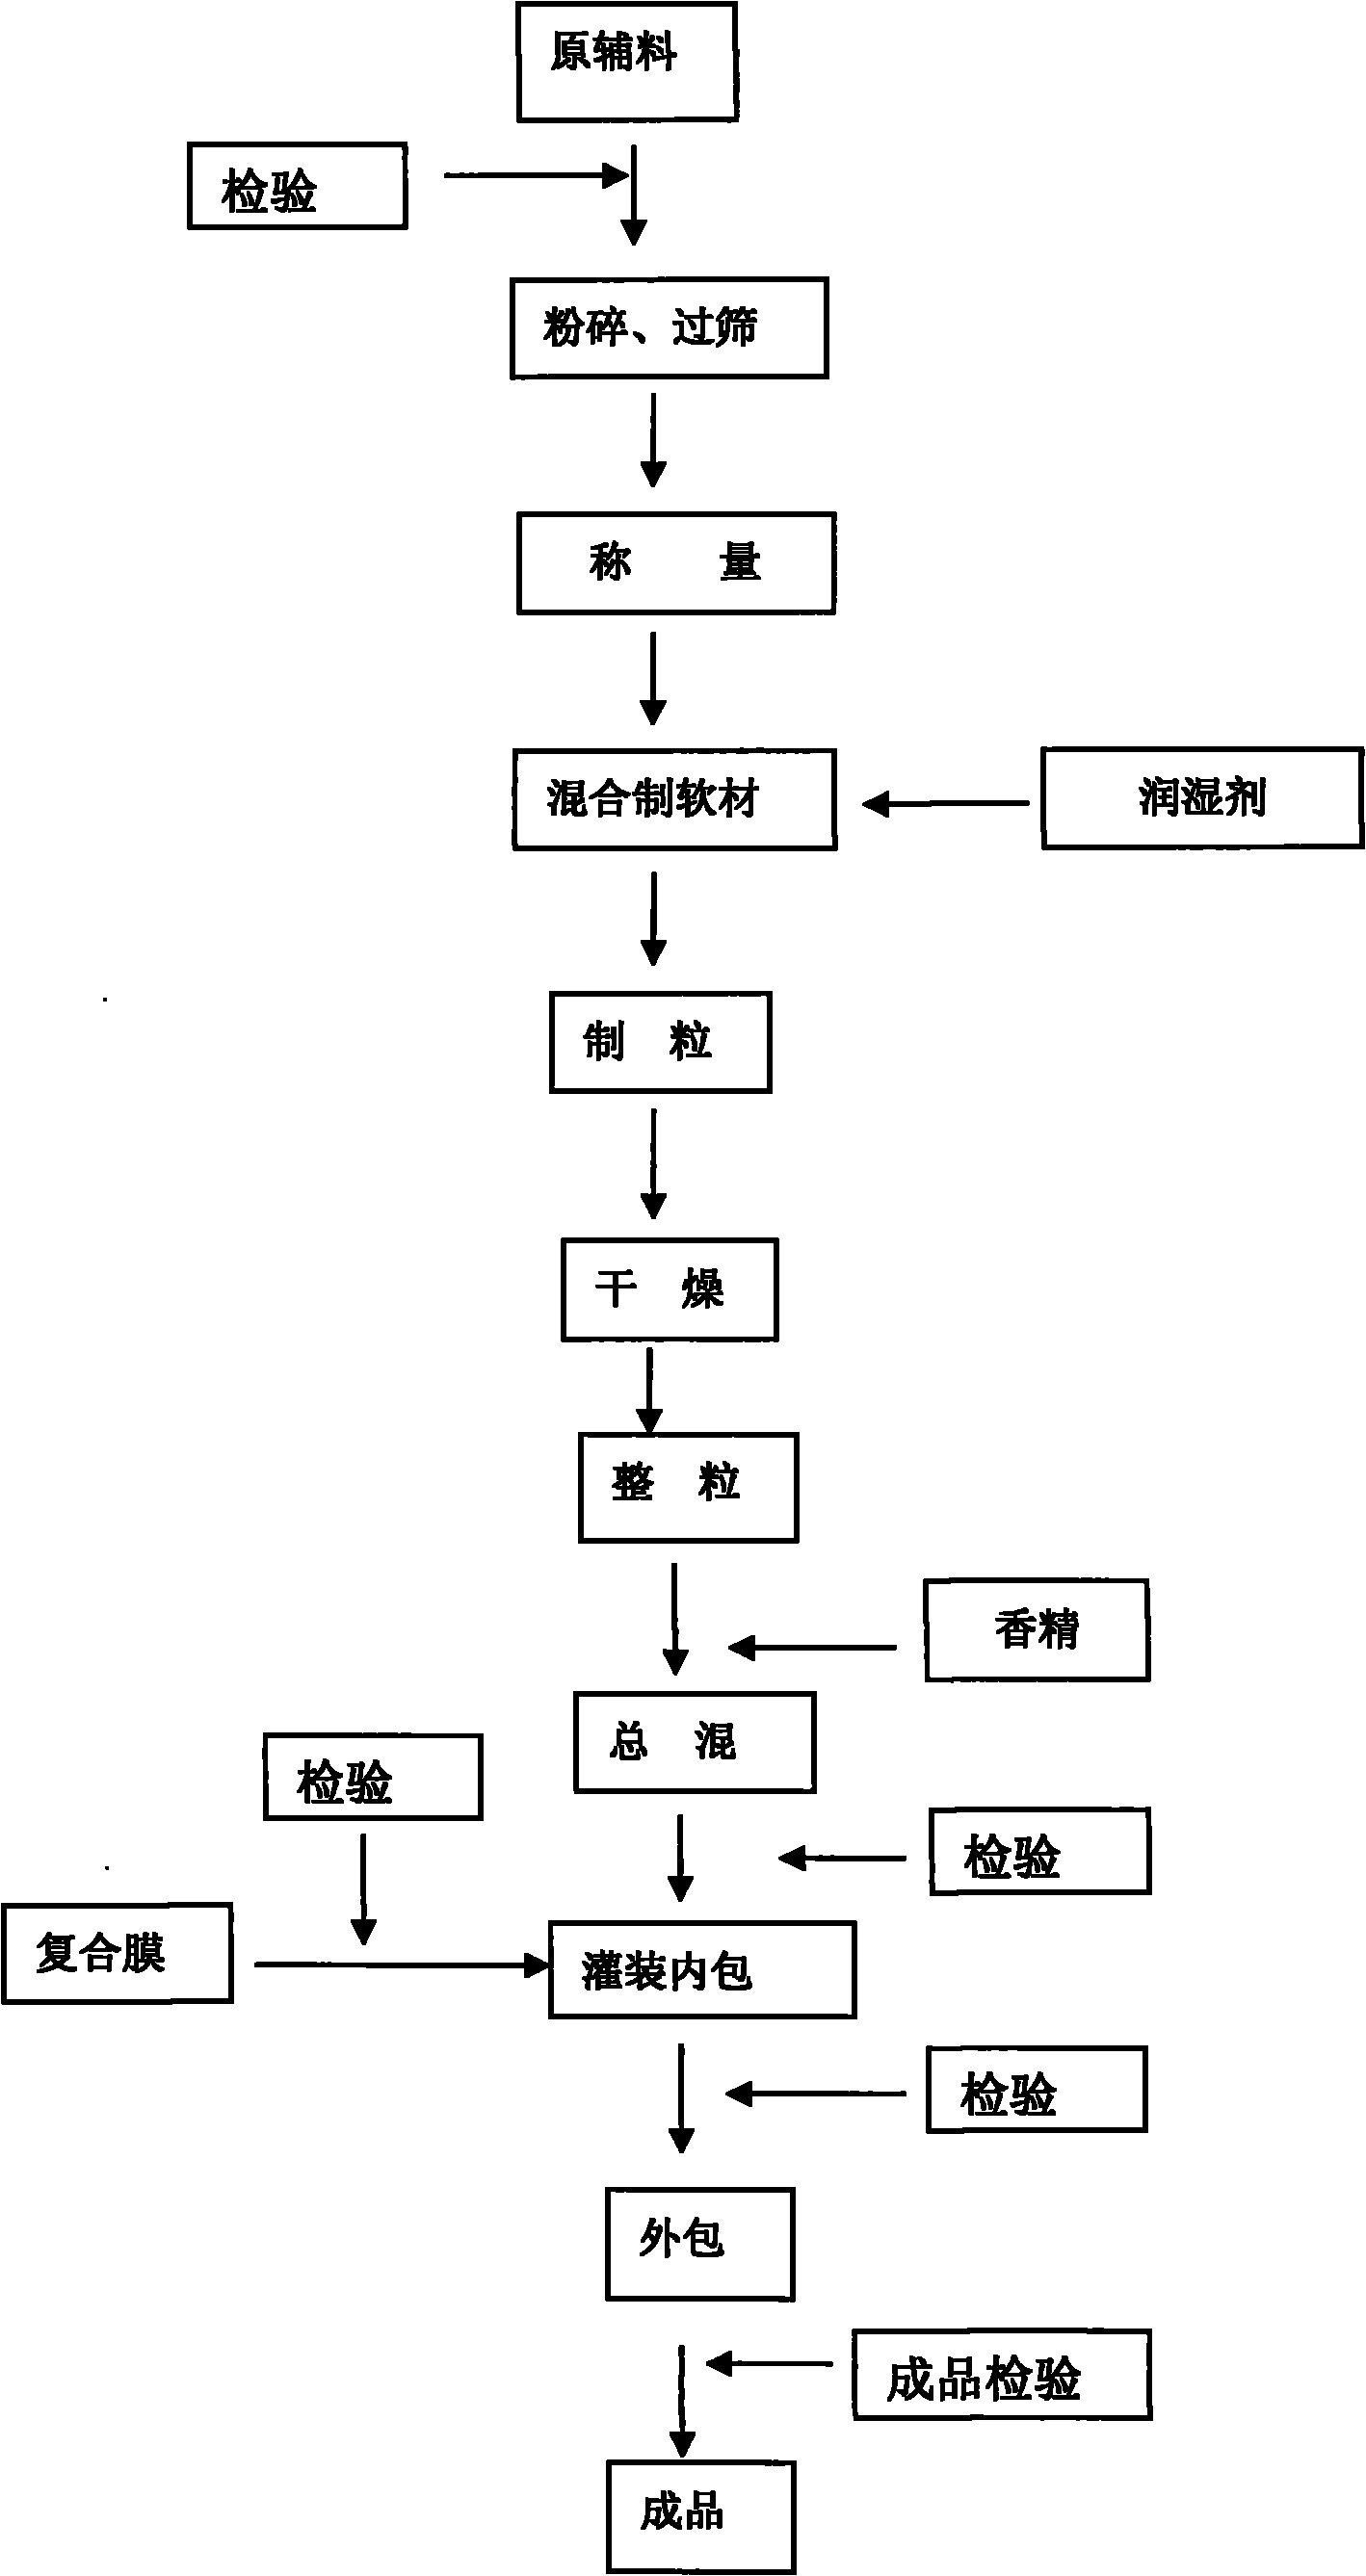 Preparation method of Huang children paracetamol-particles